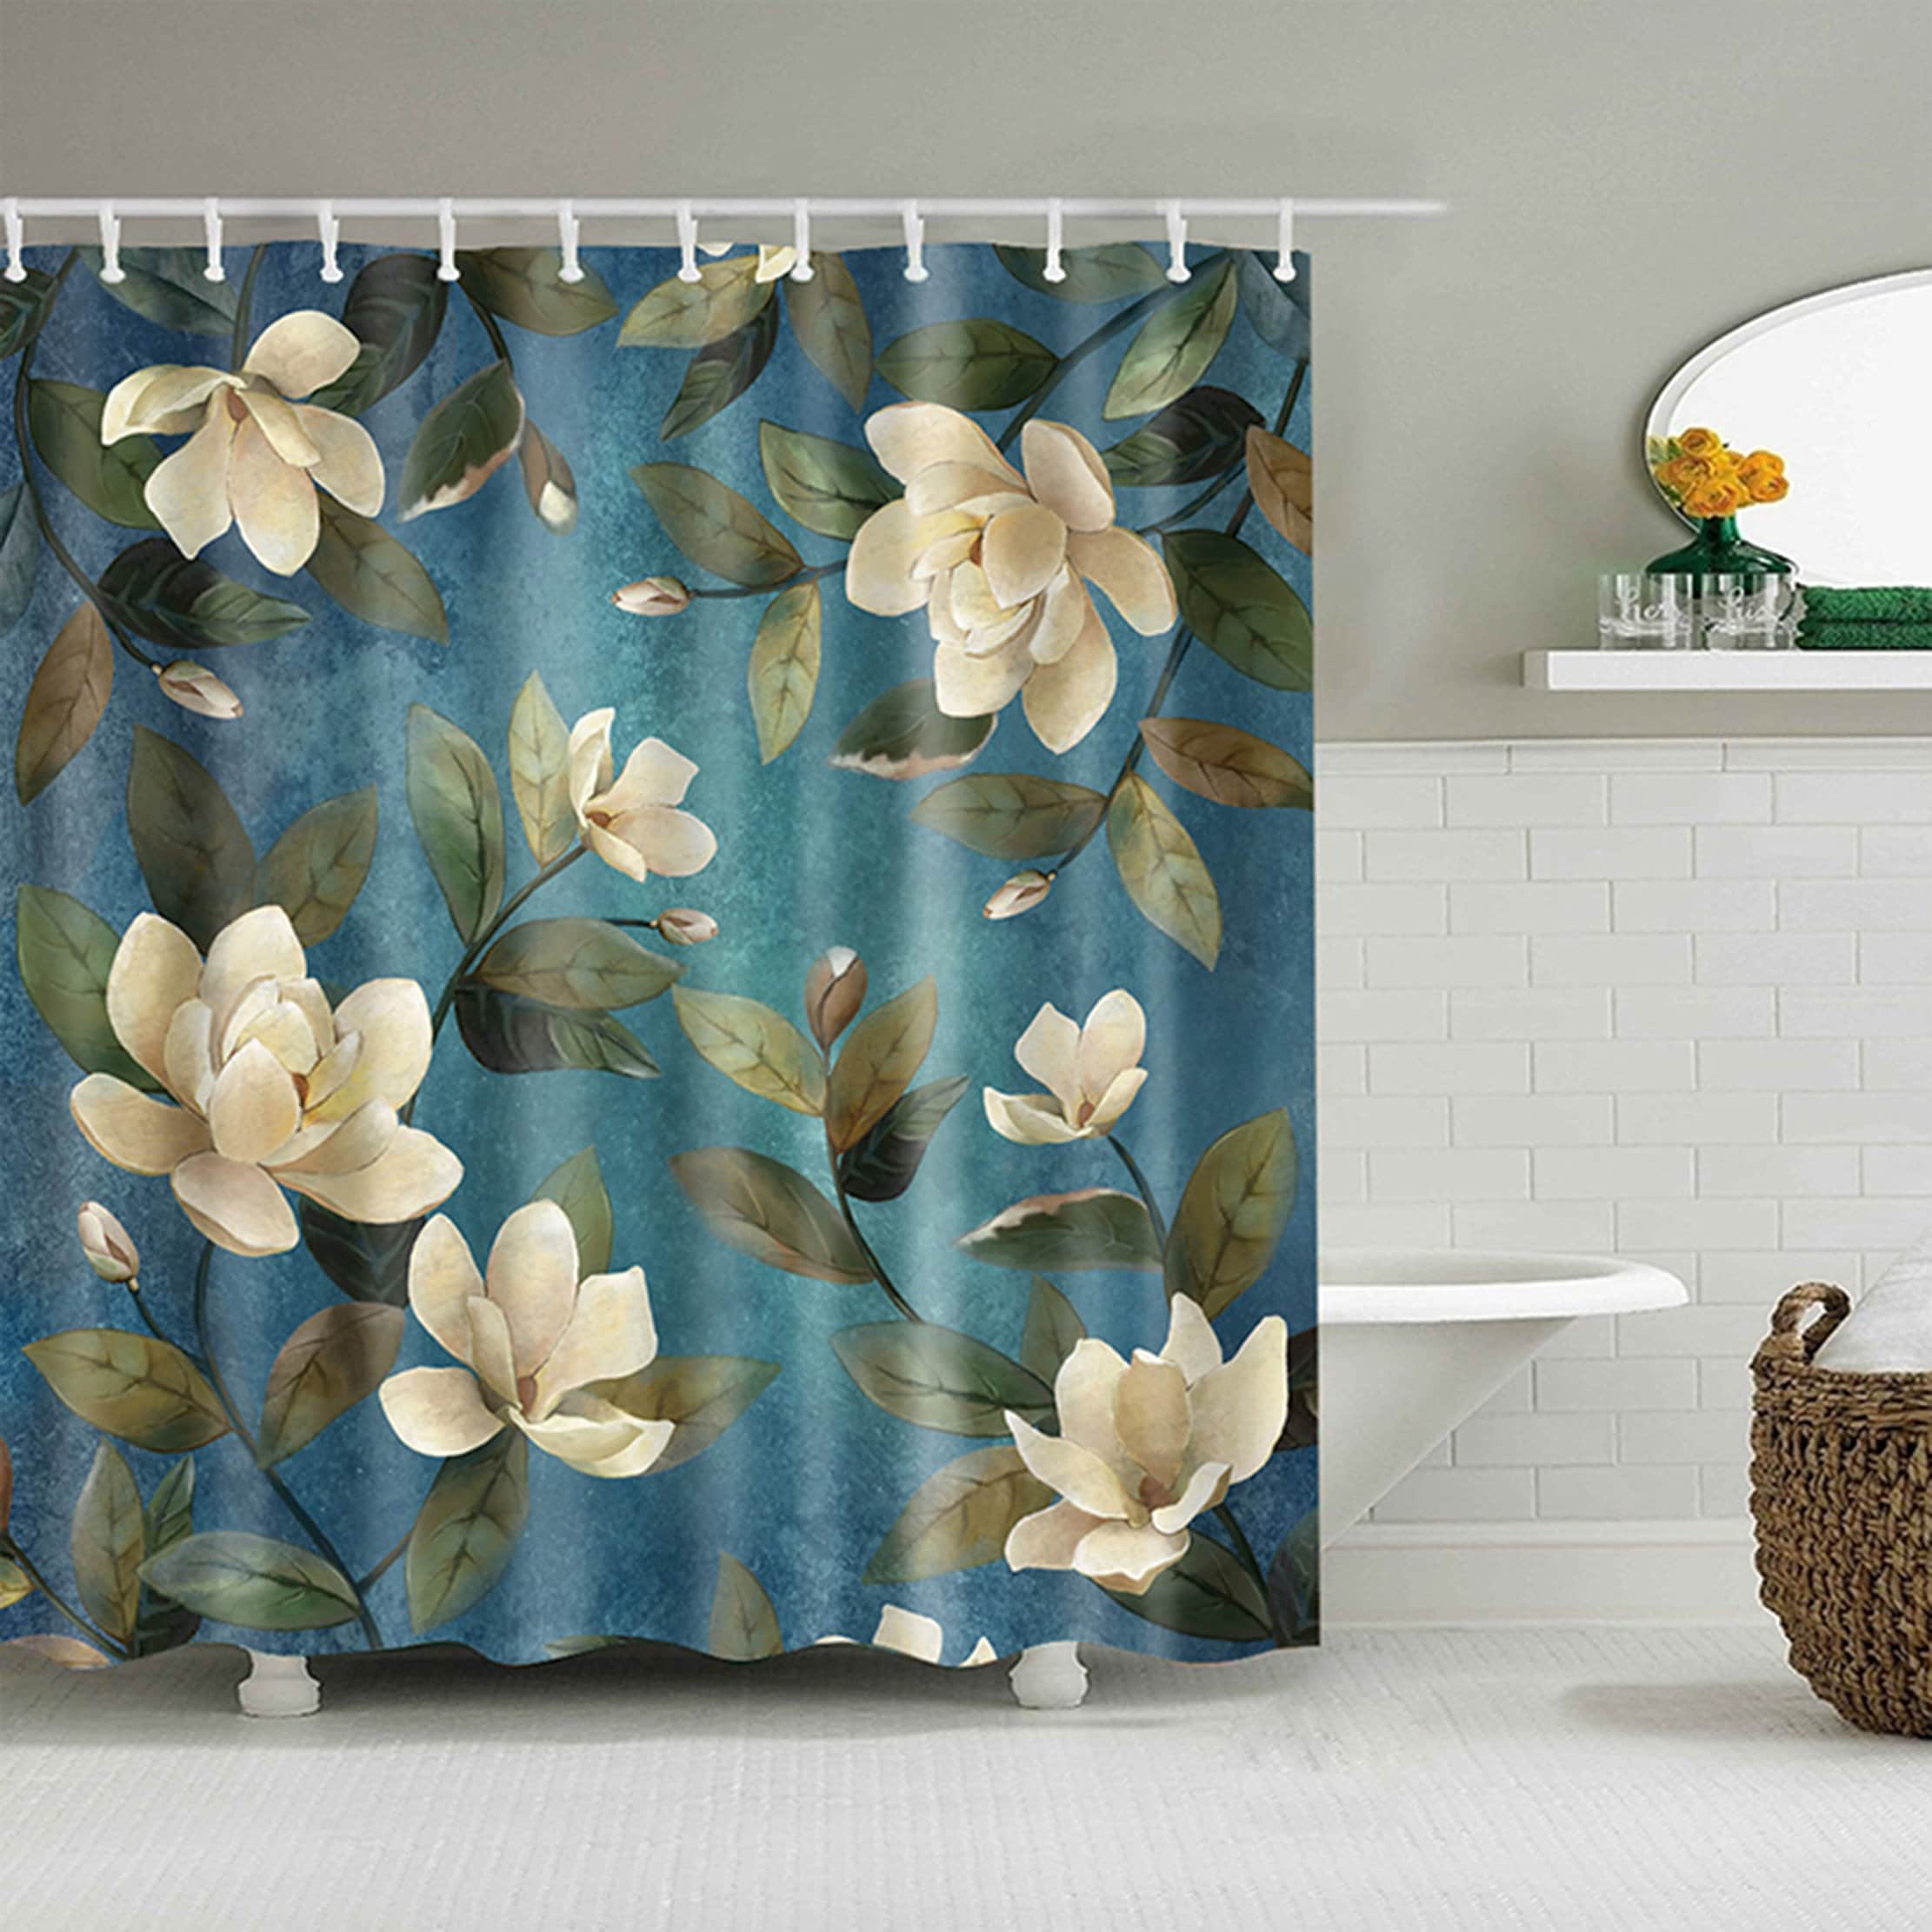 72x72'' Collage Of Photos Marine Life Waterproof Fabric Bathroom Shower Curtain 